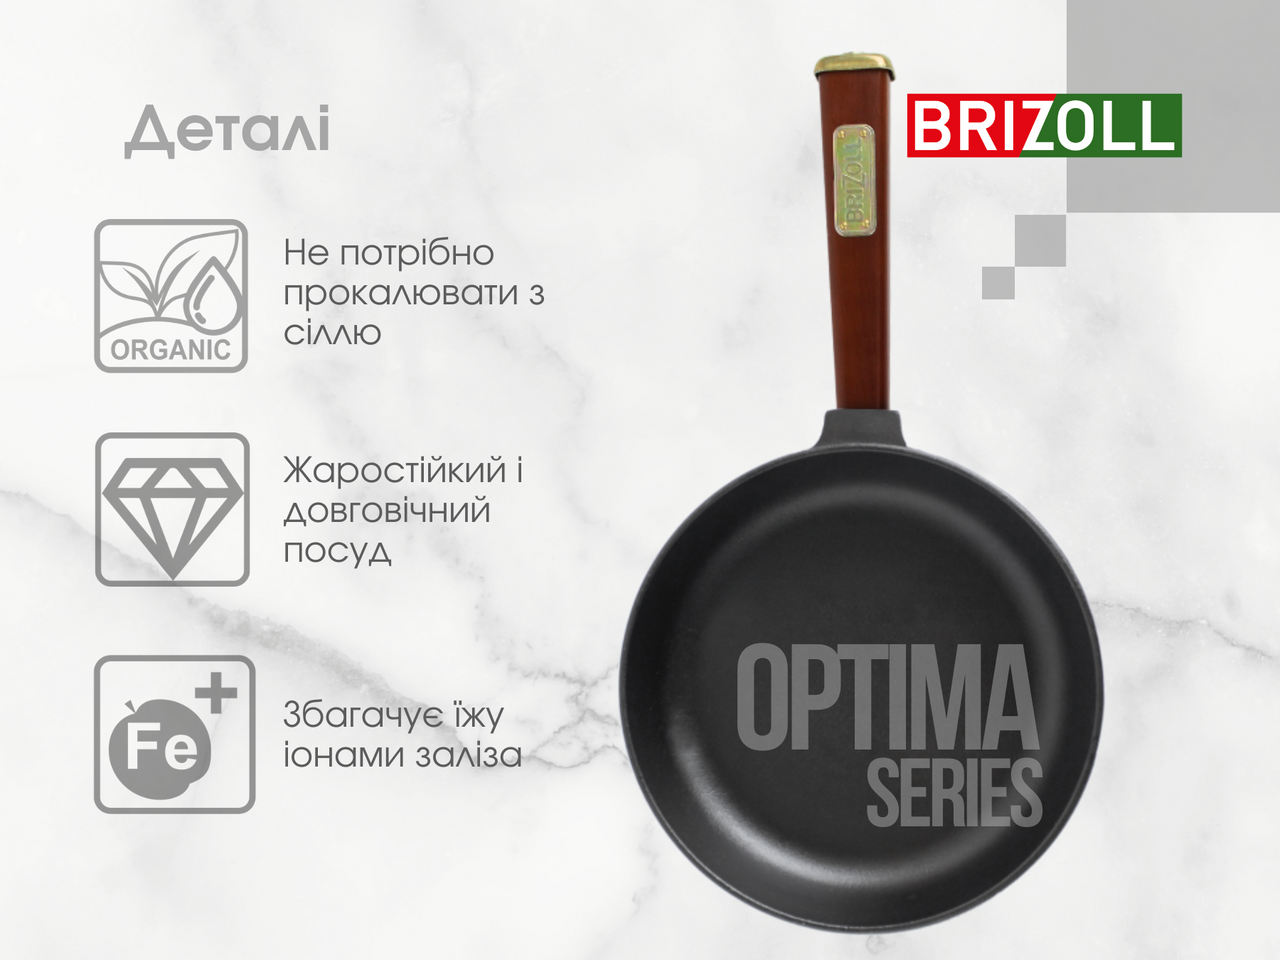 Cast iron pan with a lid Optima-Bordo 260 х 40 mm